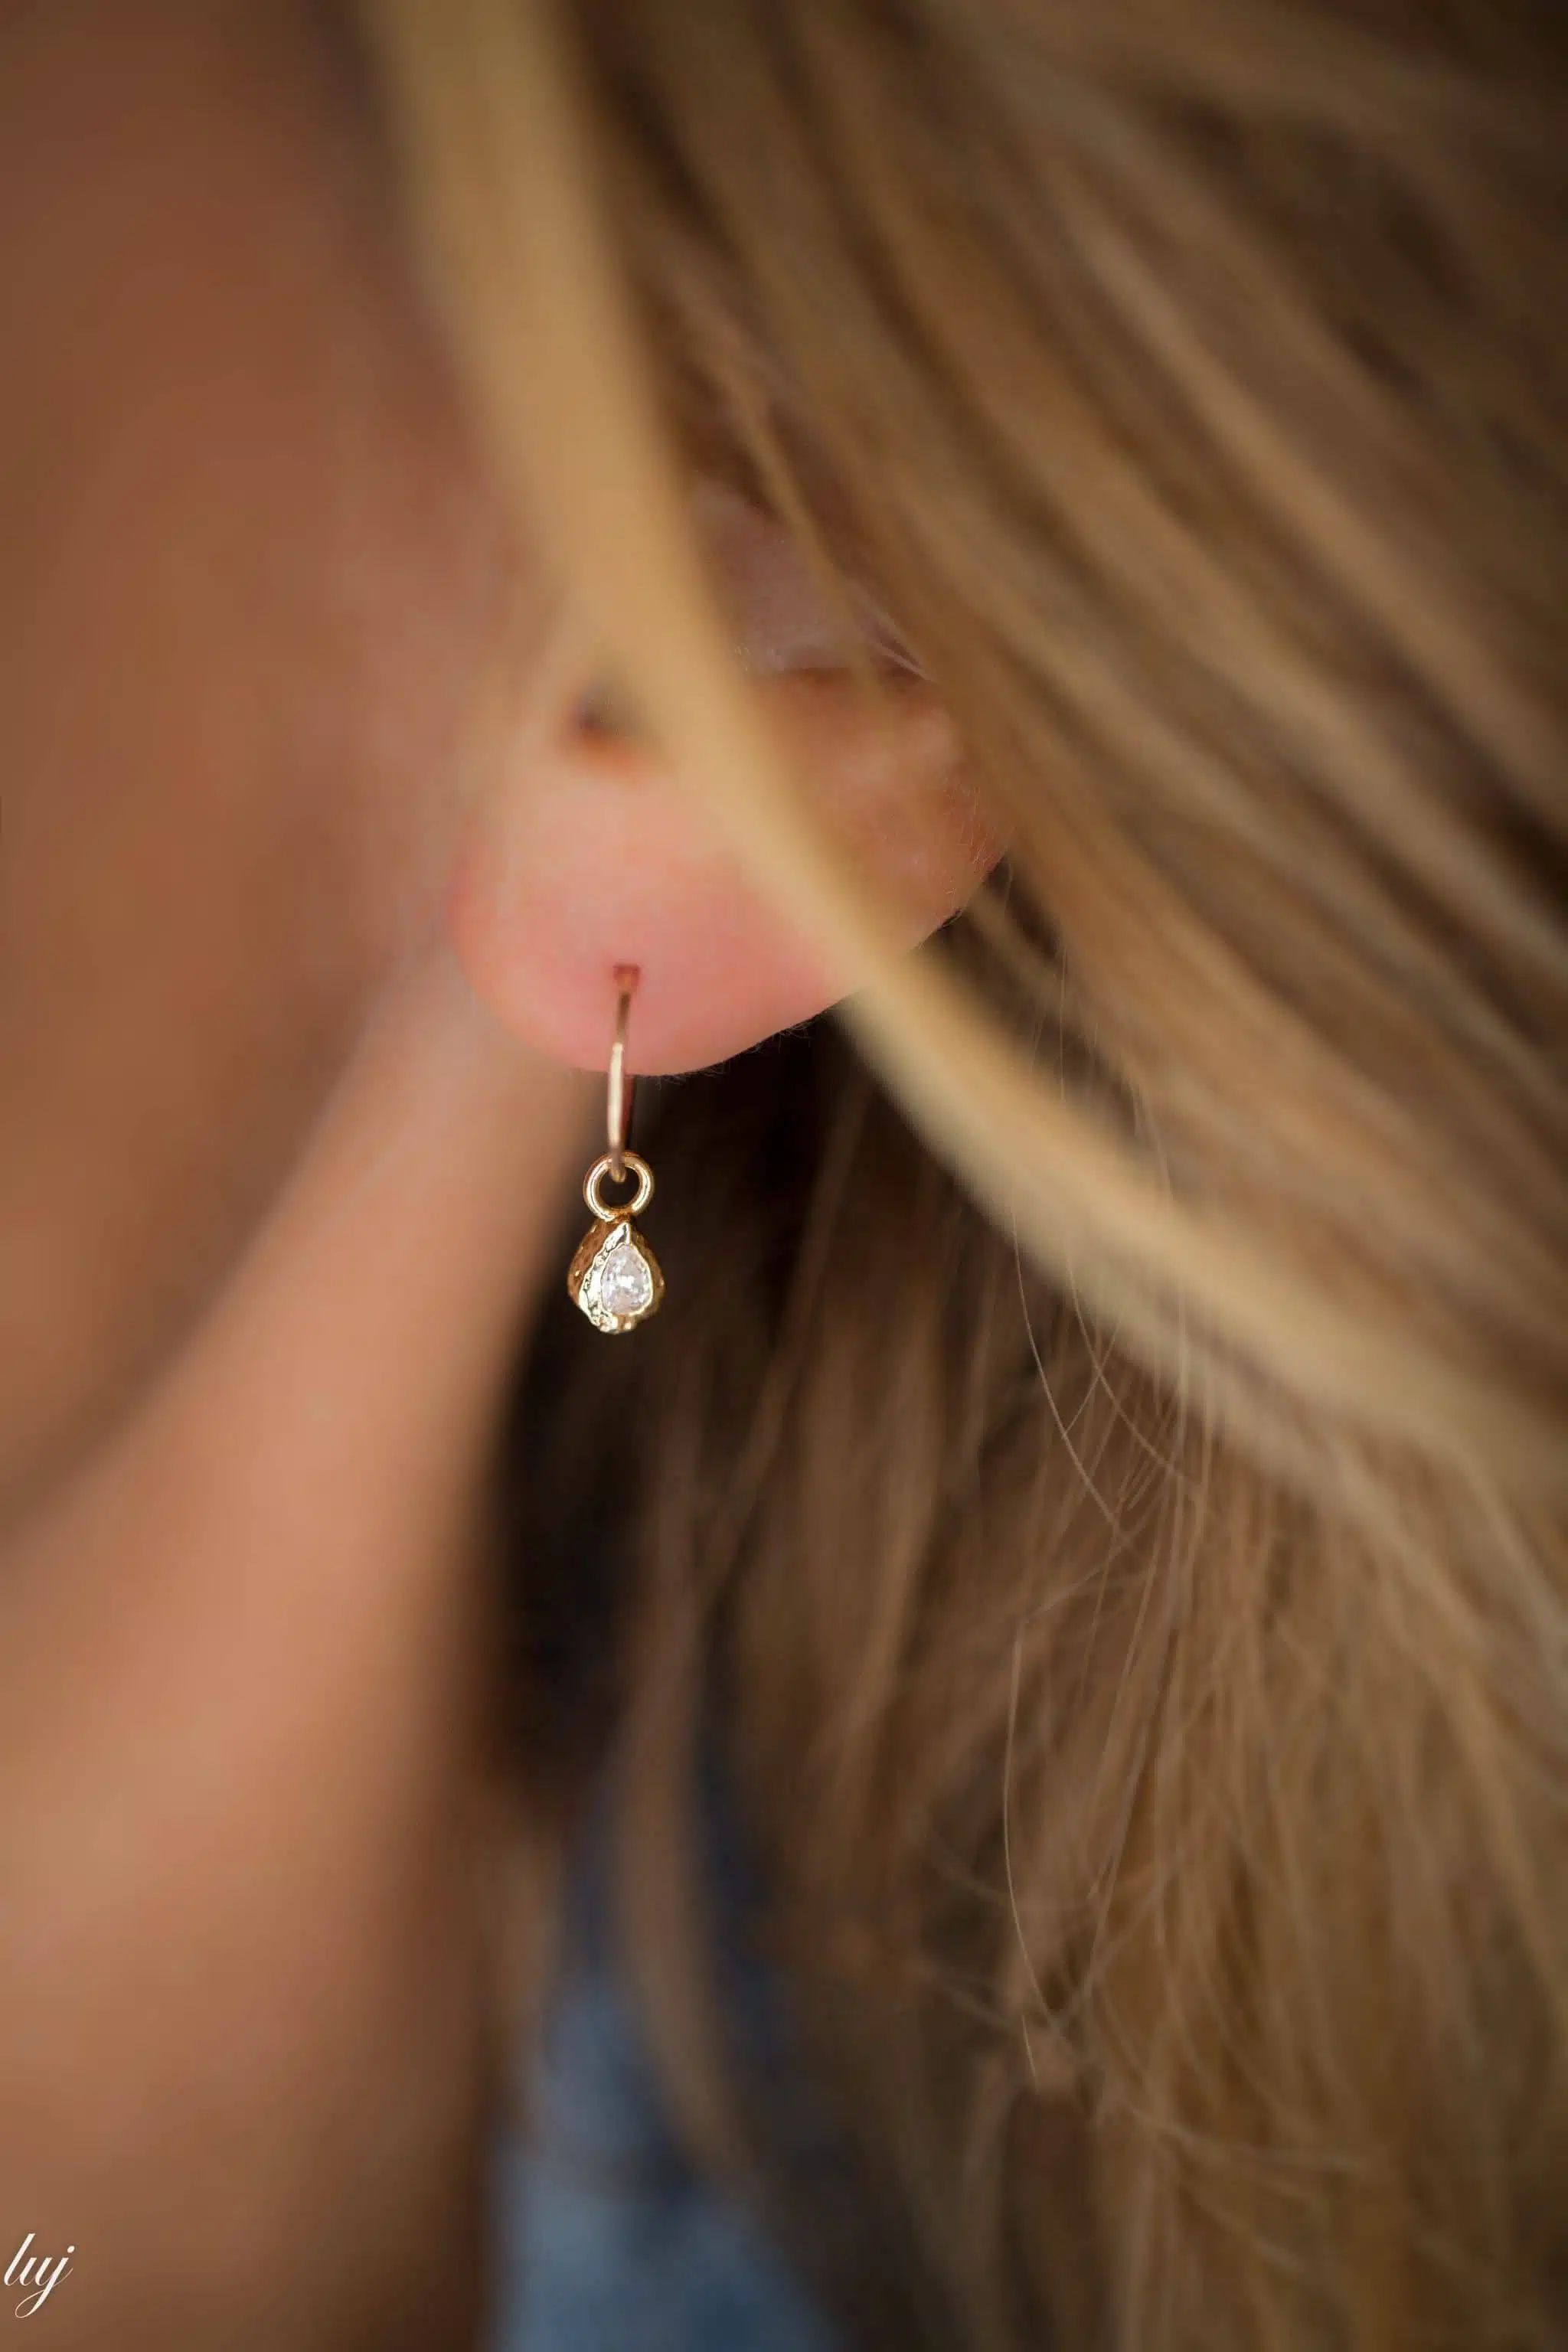 Jo hoop earrings with pendant - Luj Paris